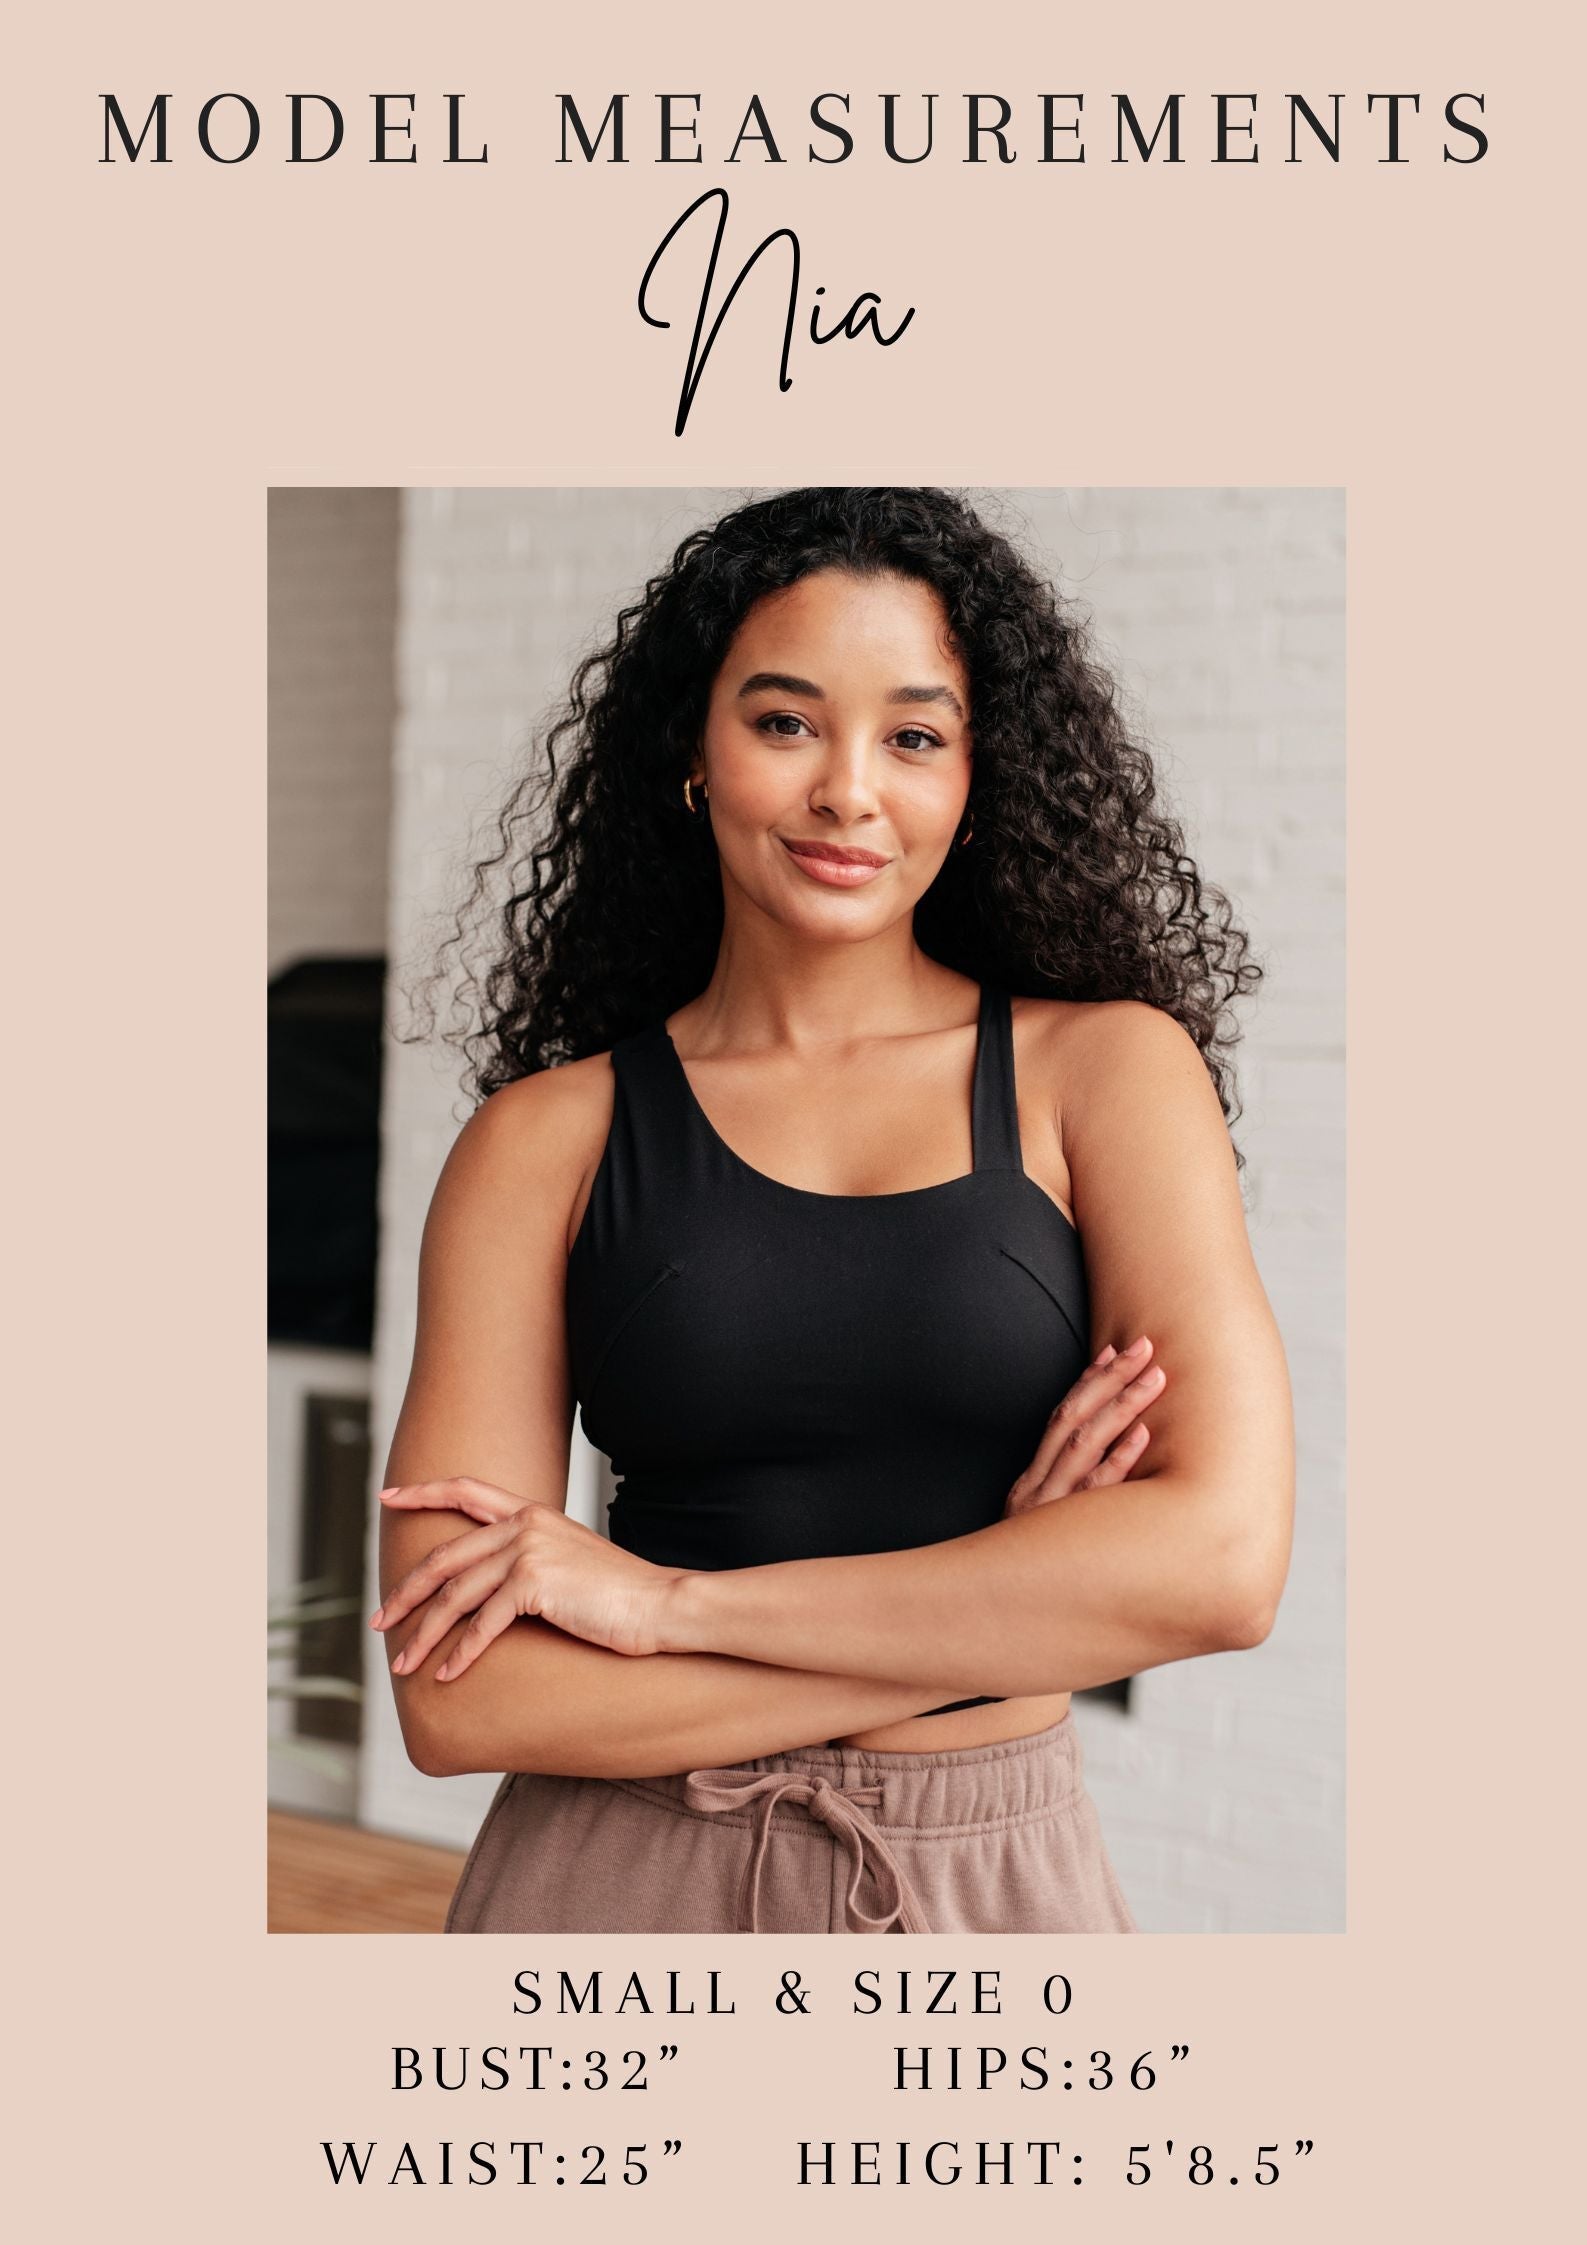 I Just Felt Like It Mock Neck Top in Mystic Grey-Short Sleeve Tops-Krush Kandy, Women's Online Fashion Boutique Located in Phoenix, Arizona (Scottsdale Area)